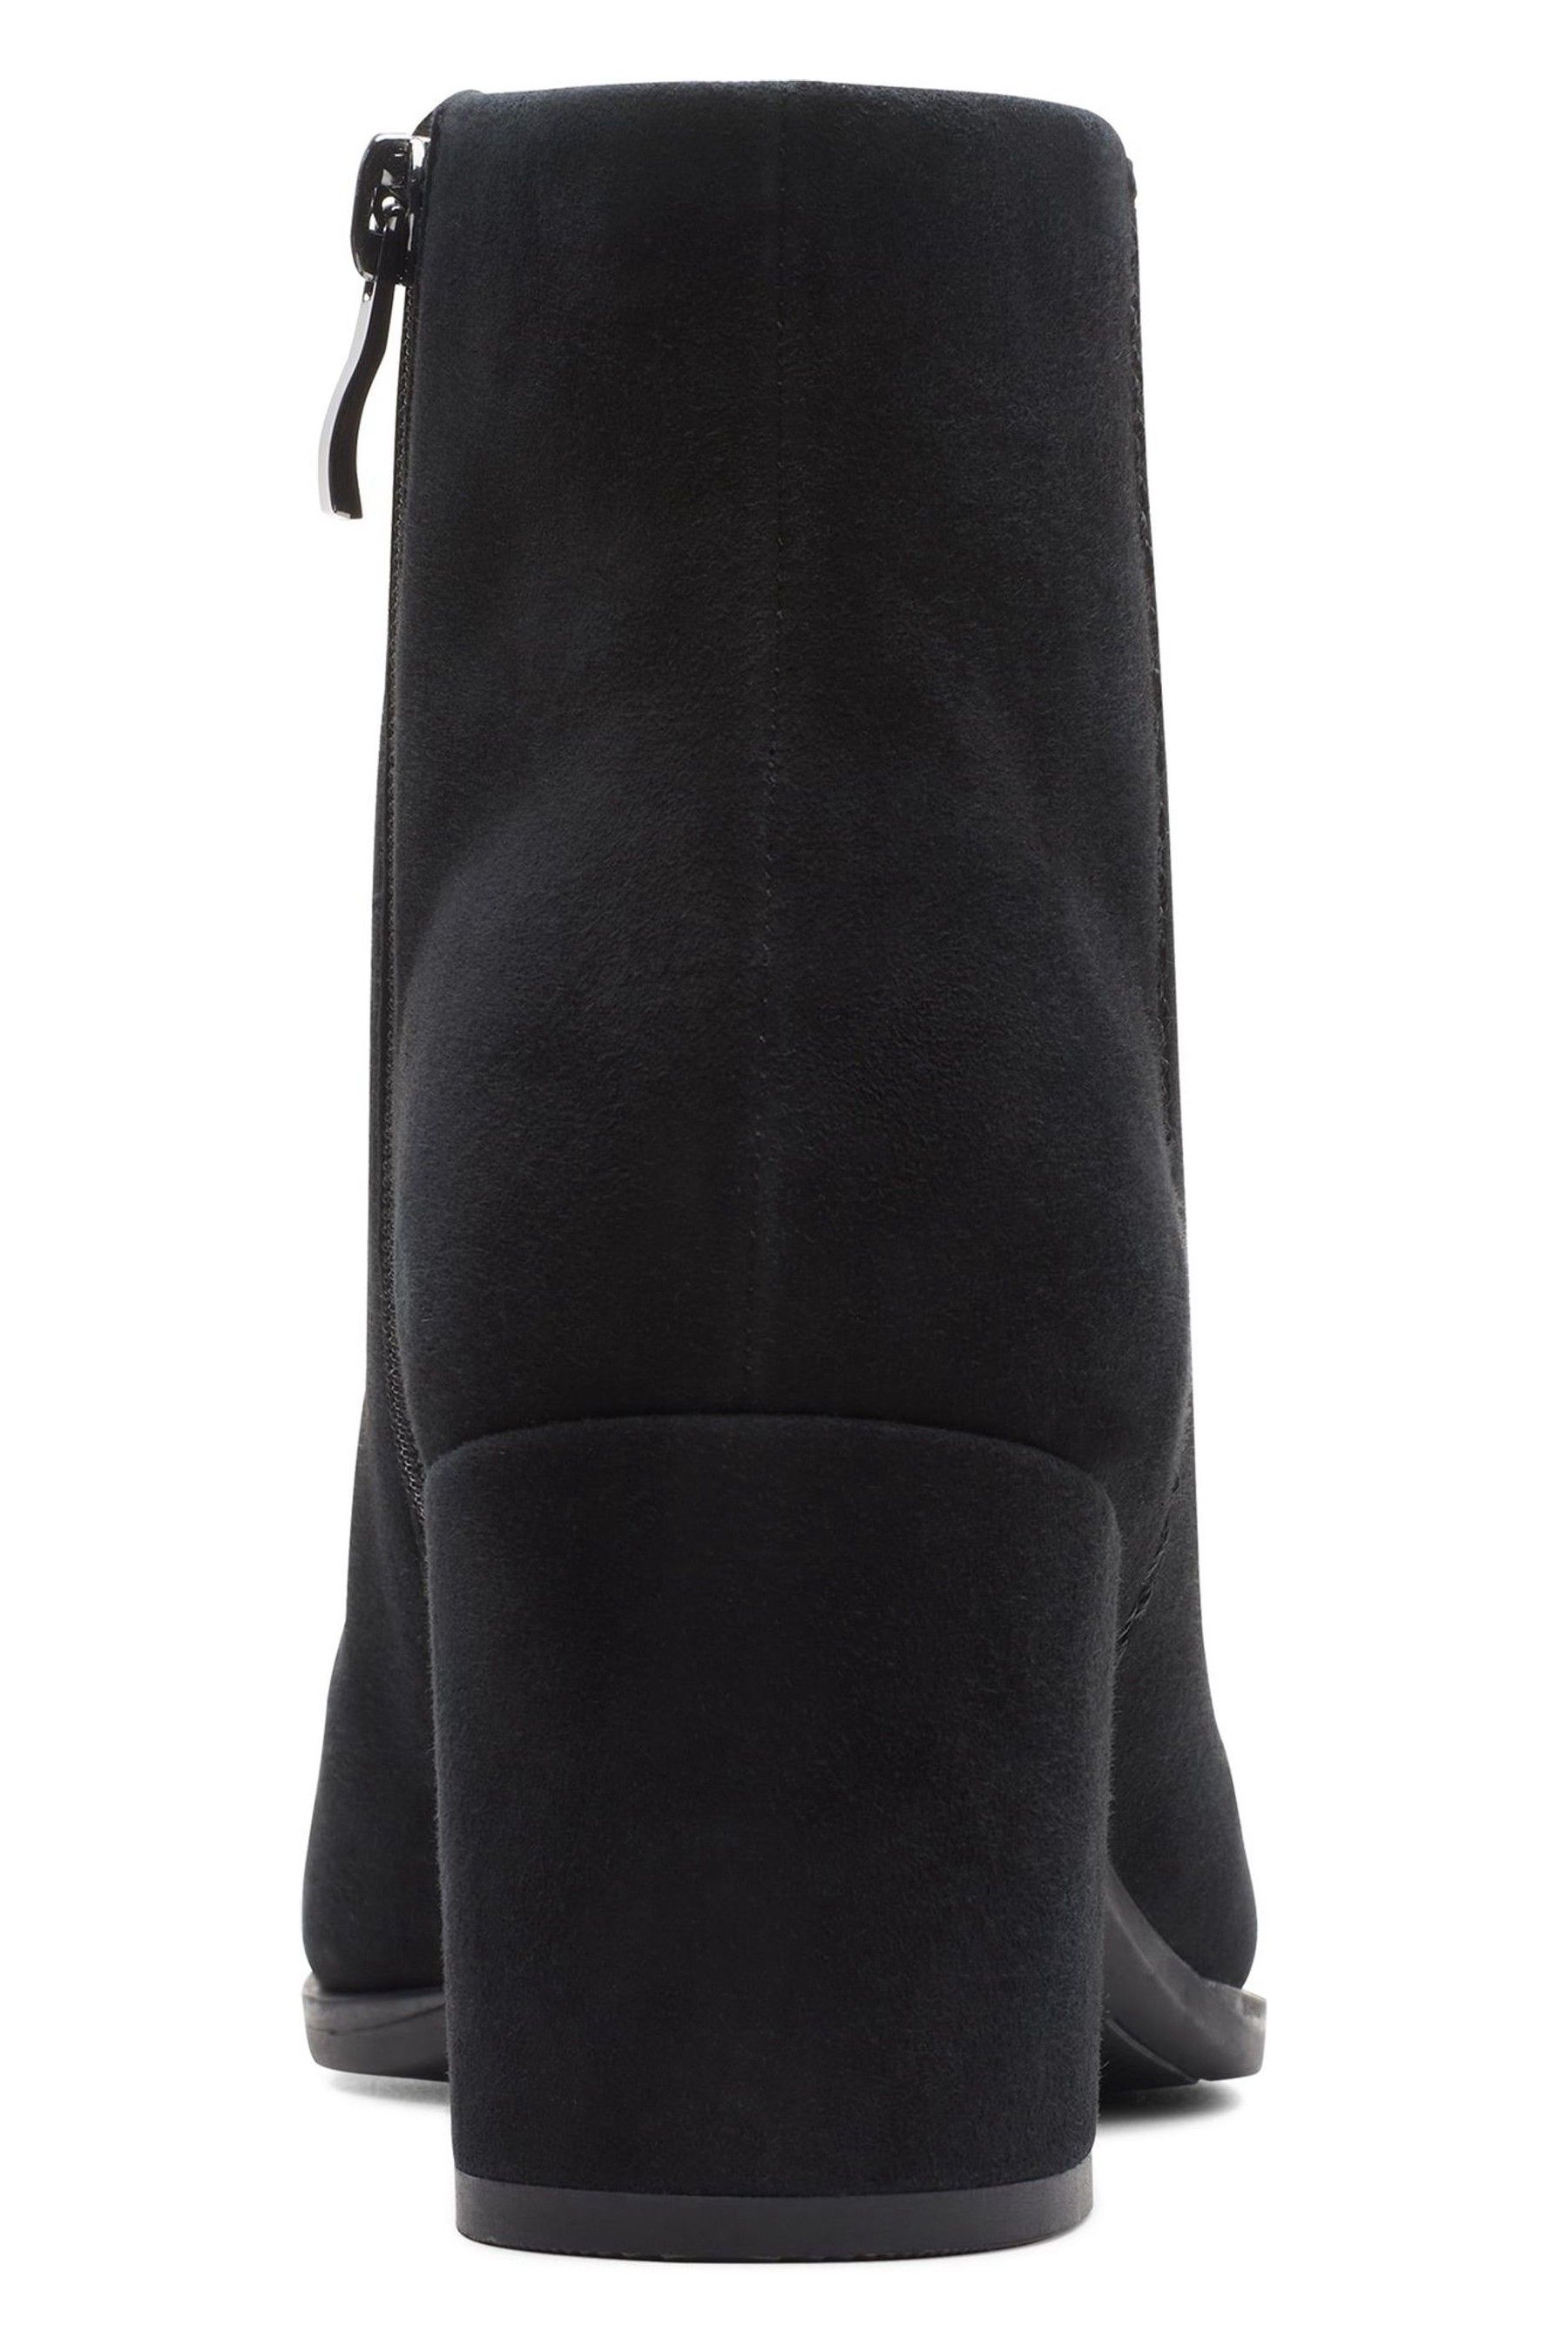 Buy Clarks Black Suede Freva55 Zip Boots from the Next UK online shop